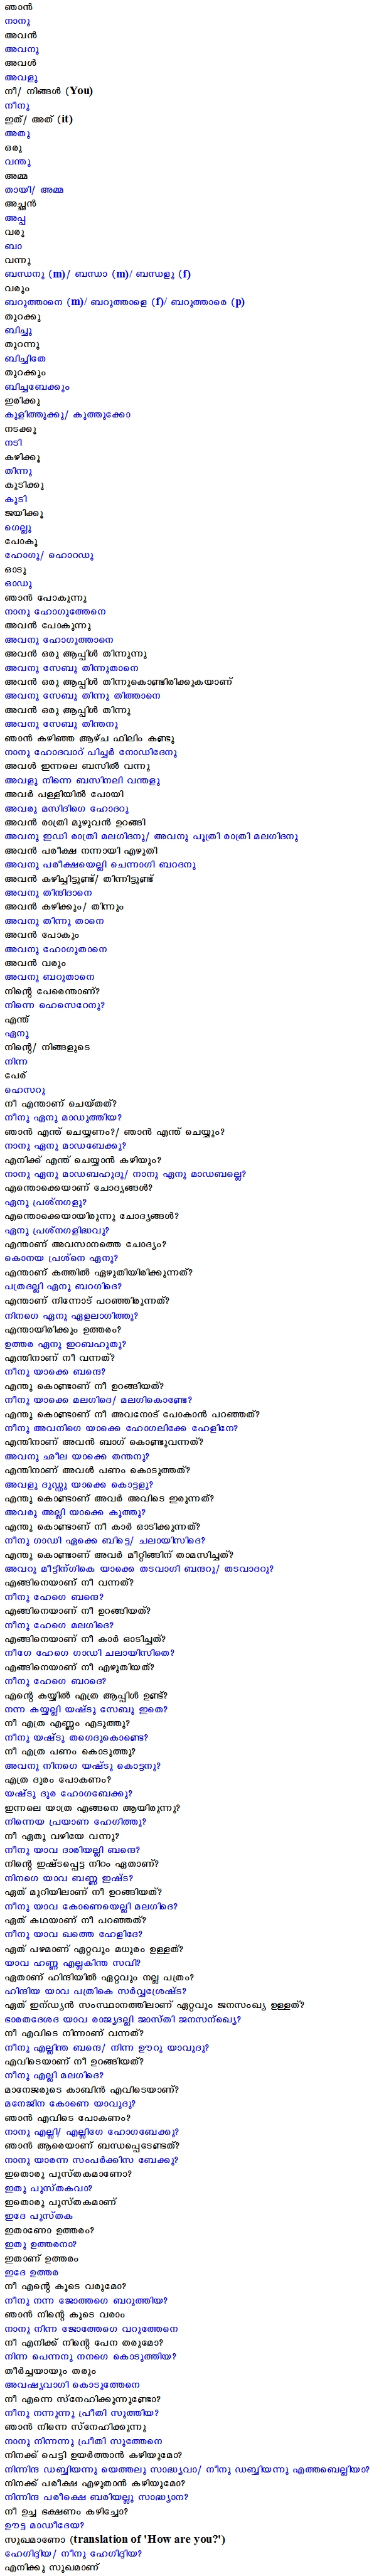 hindi malayalam dictionary pdf